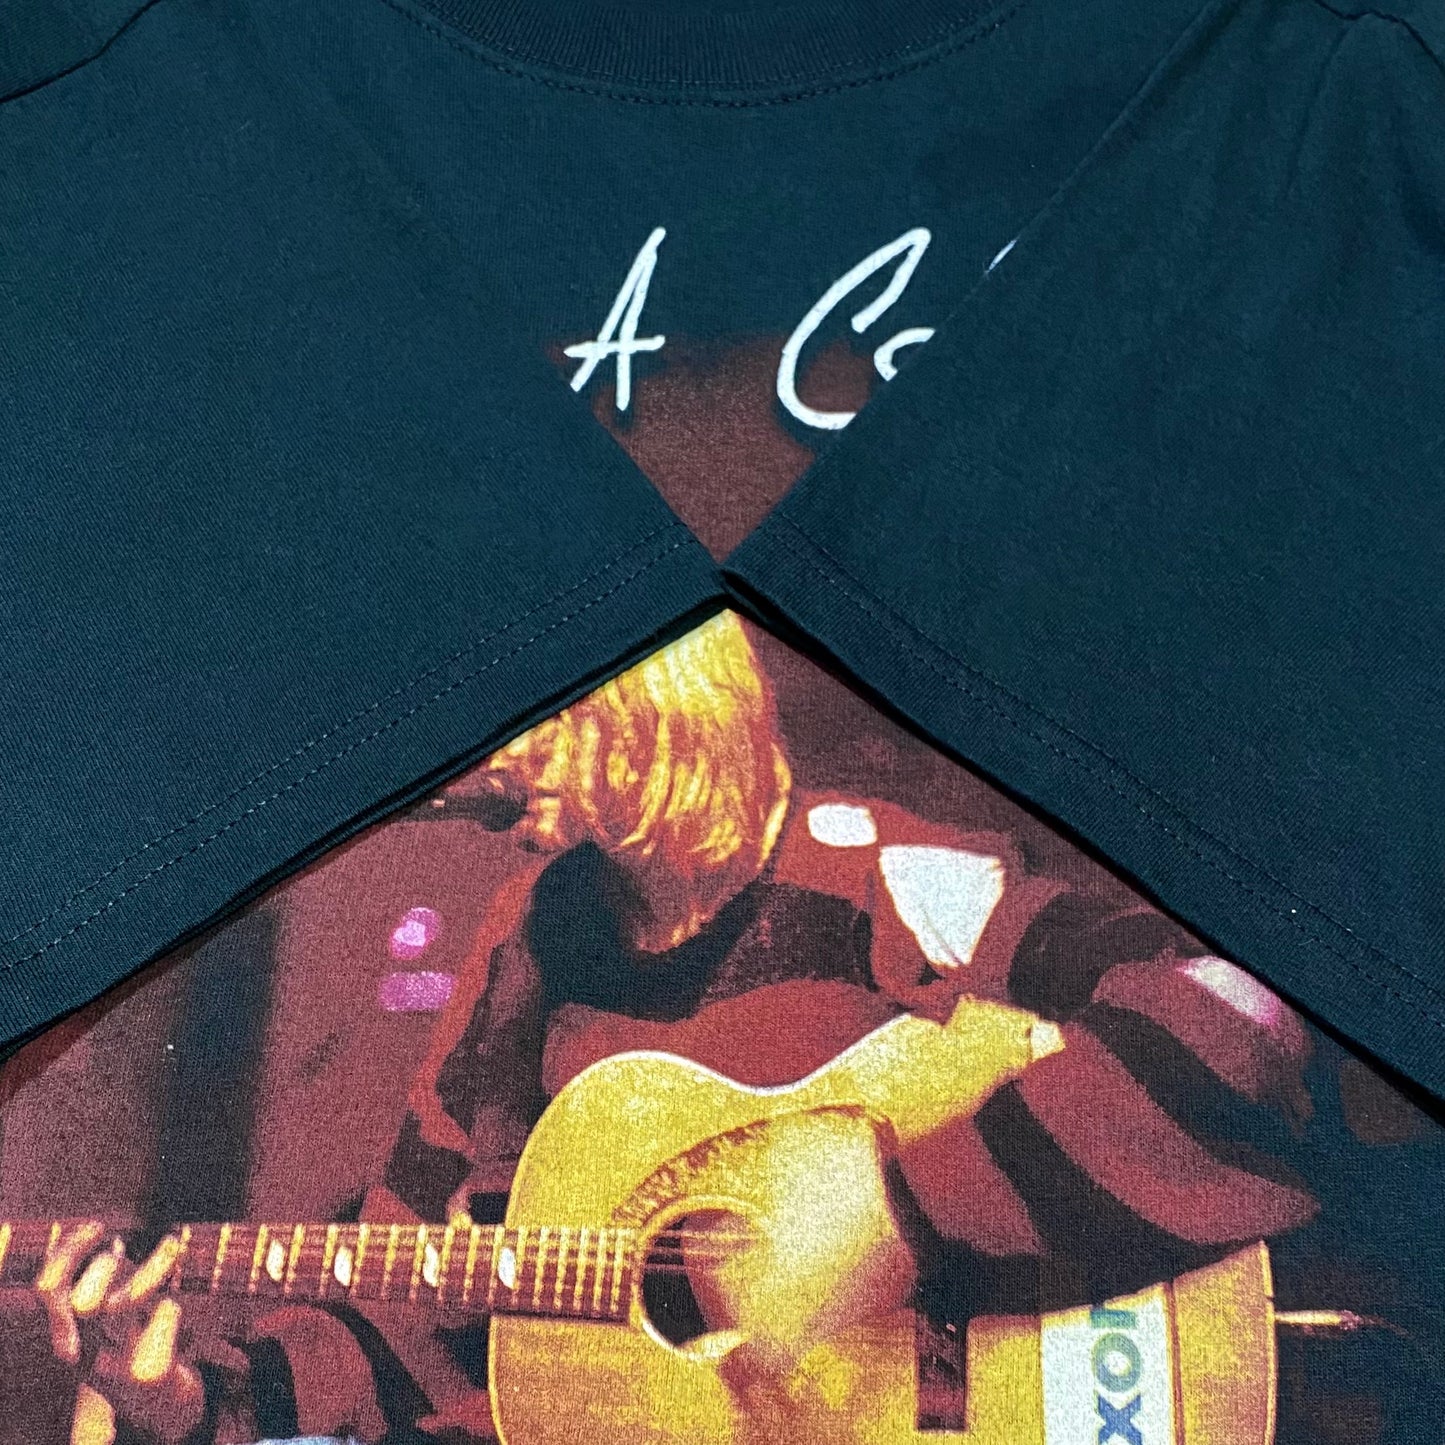 00's"Kurt cobain" MTV unplugge in newyork